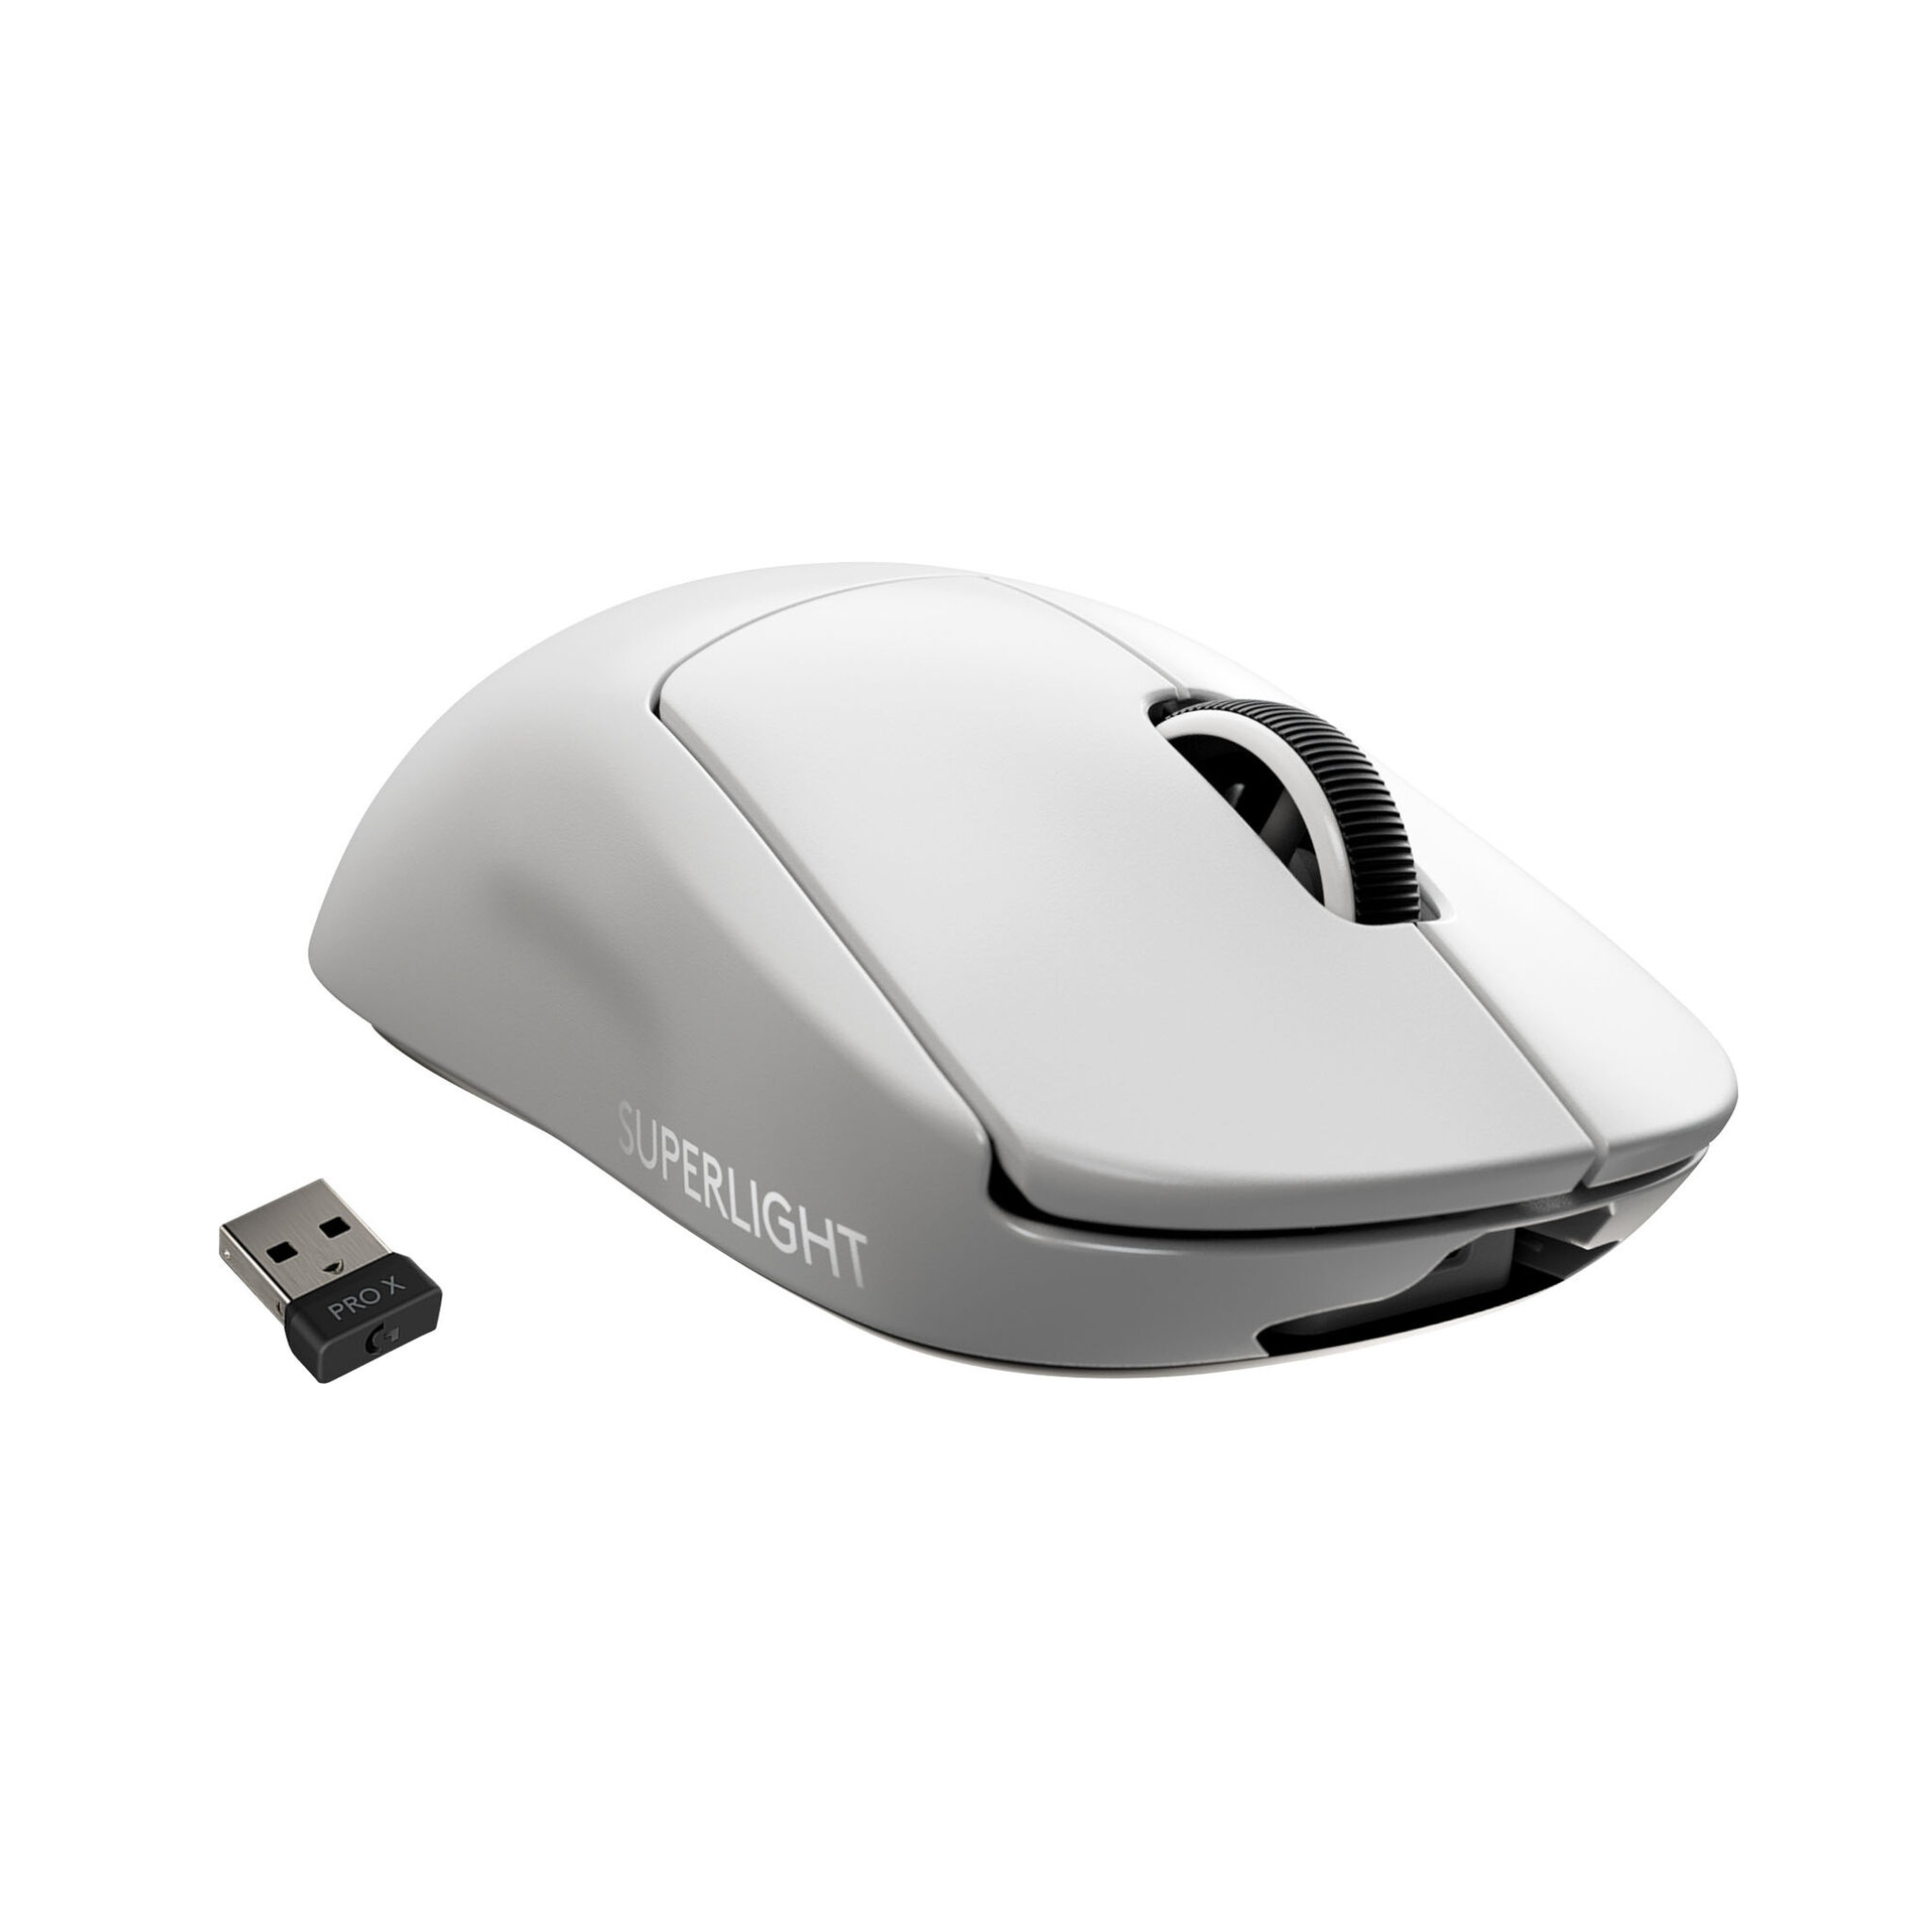 Logitech Pro X Superlight Wireless Optical Gaming Mouse w/ HERO 25K Sensor (White)